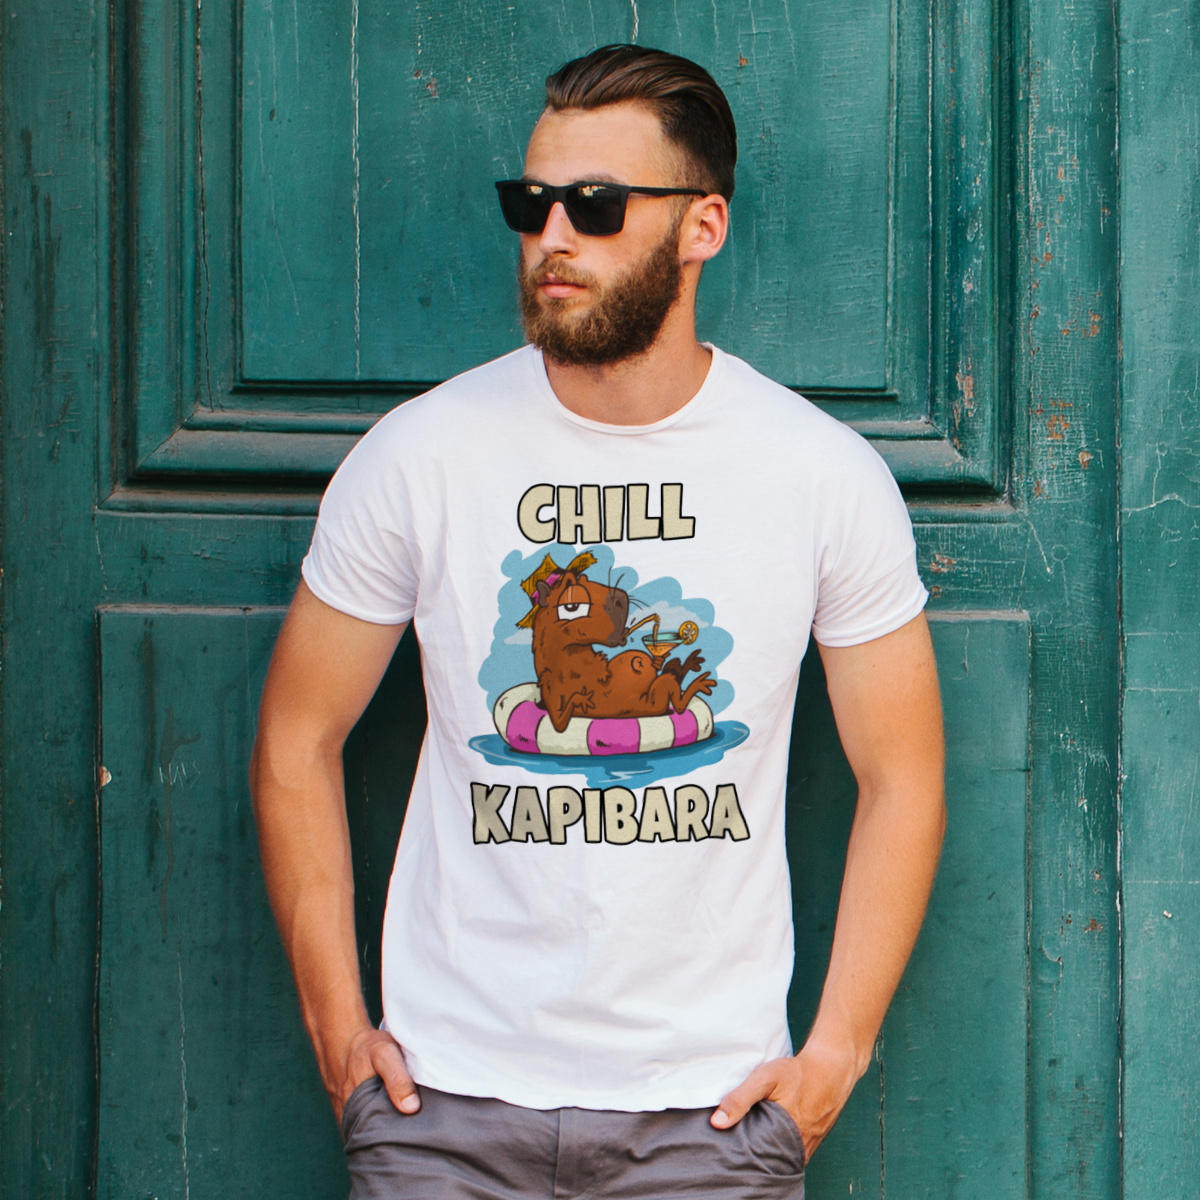 Chill Kapibara - Męska Koszulka Biała